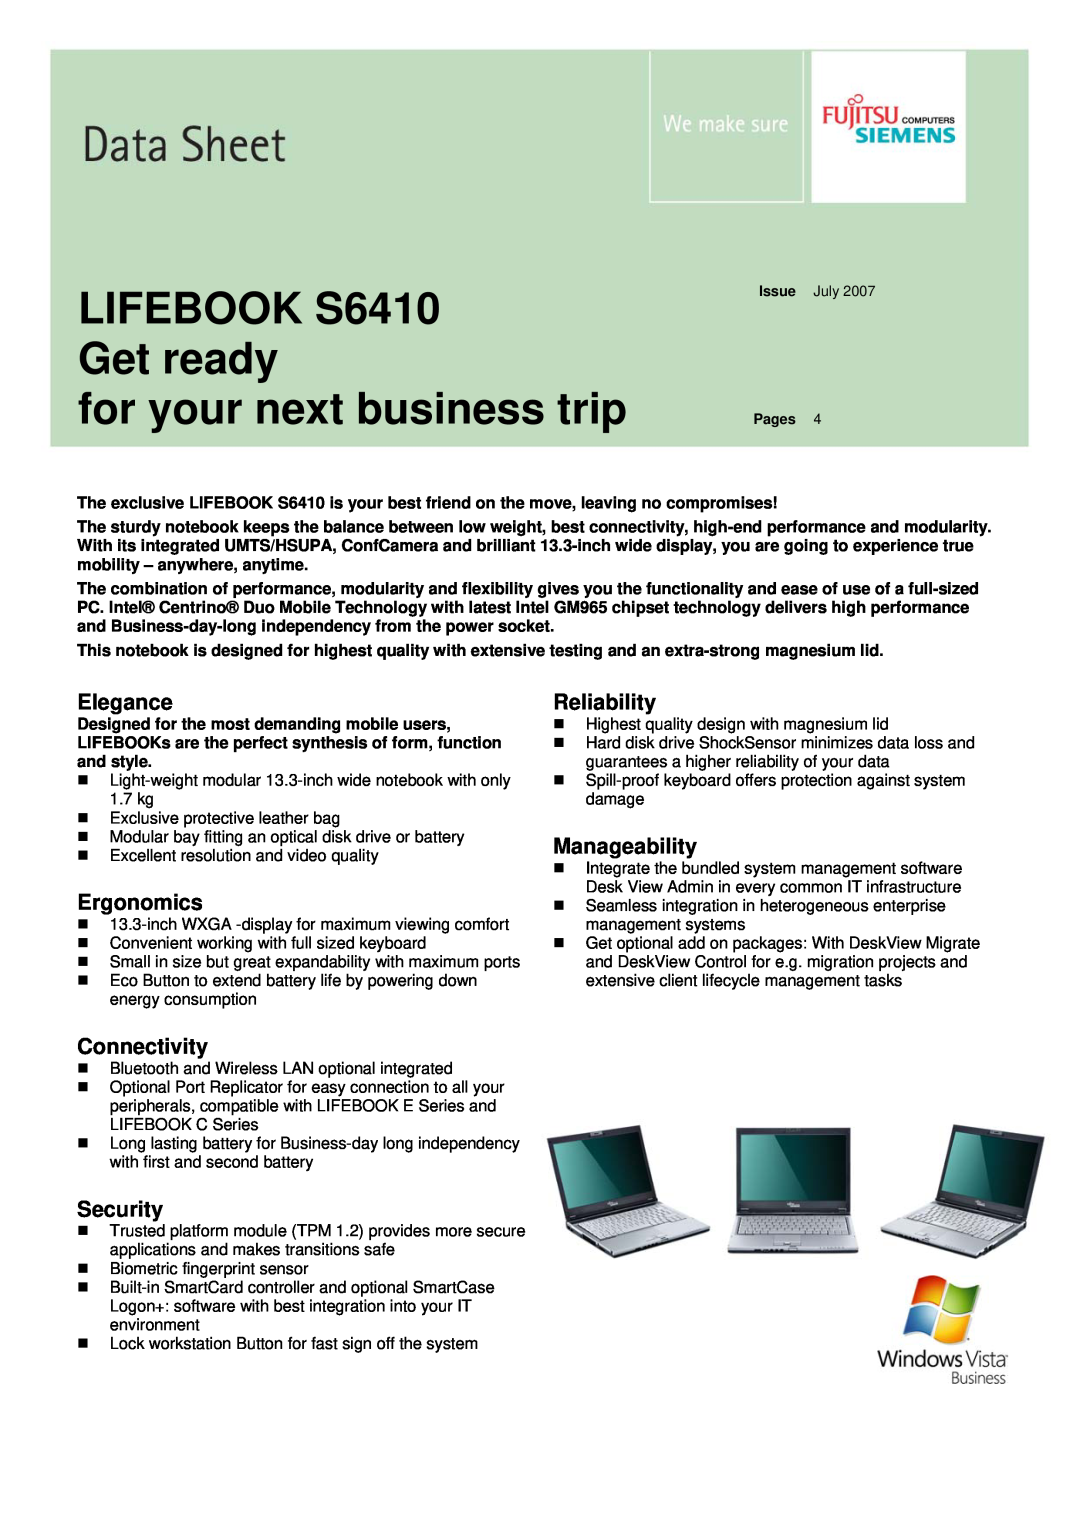 Fujitsu Siemens Computers manual LIFEBOOK S6410 Get ready for your next business trip, Elegance, Ergonomics, Security 